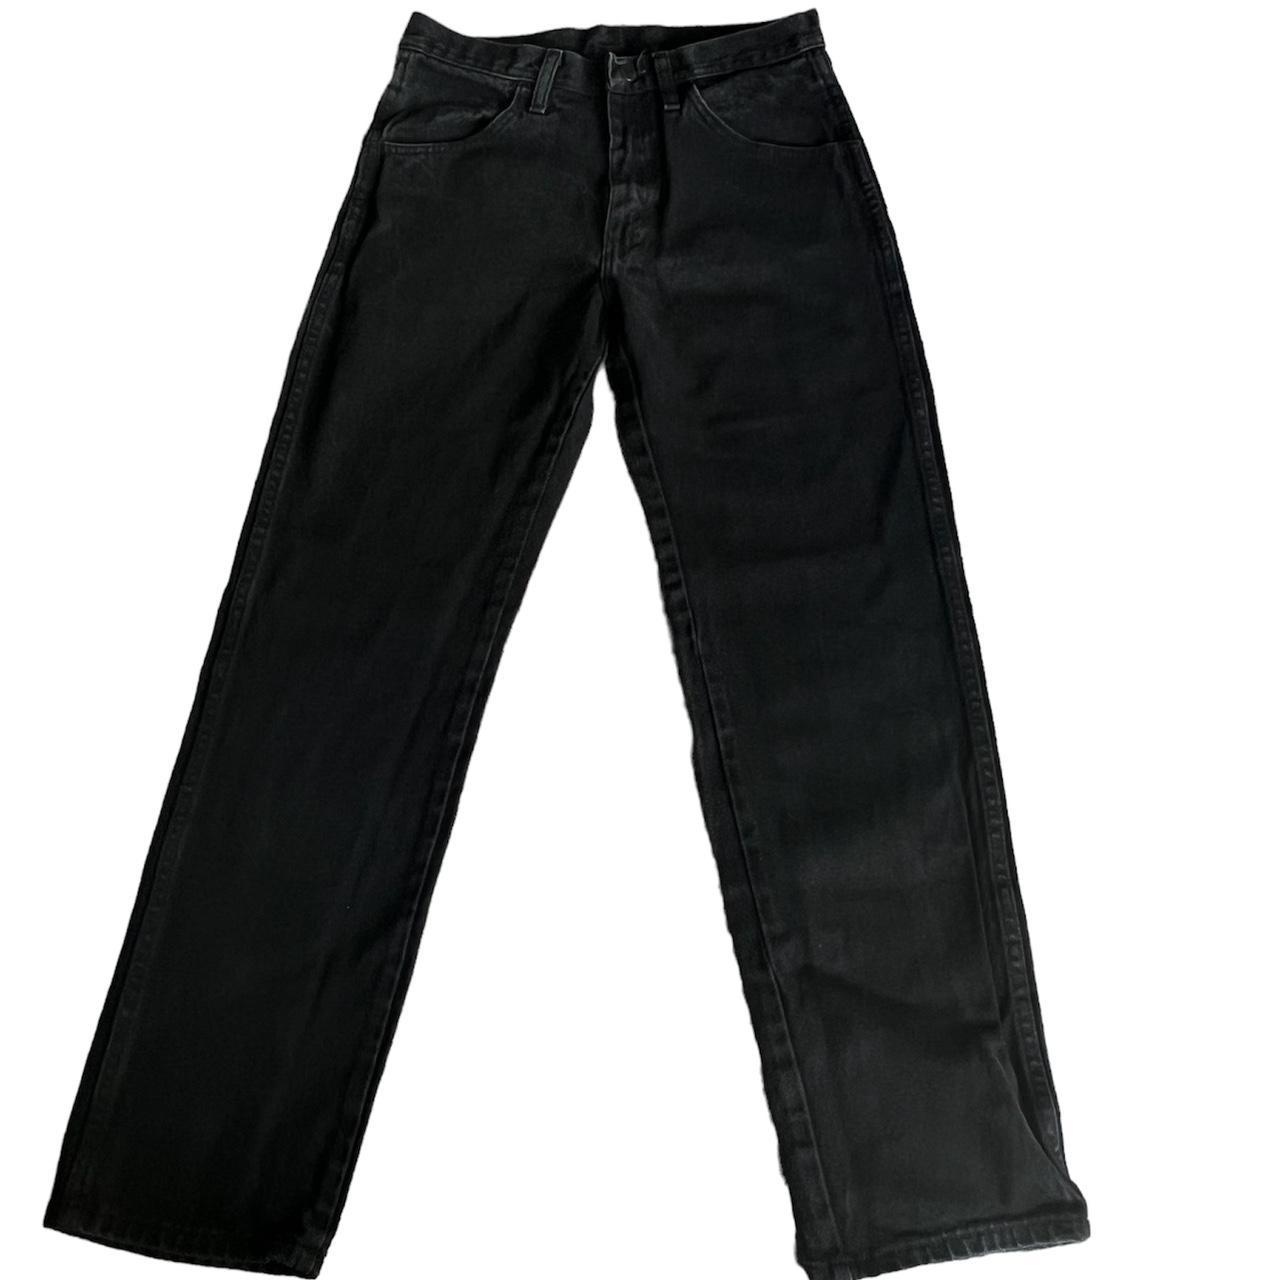 Black jeans 100% Cotton Size 29 x 30 #rustler... - Depop